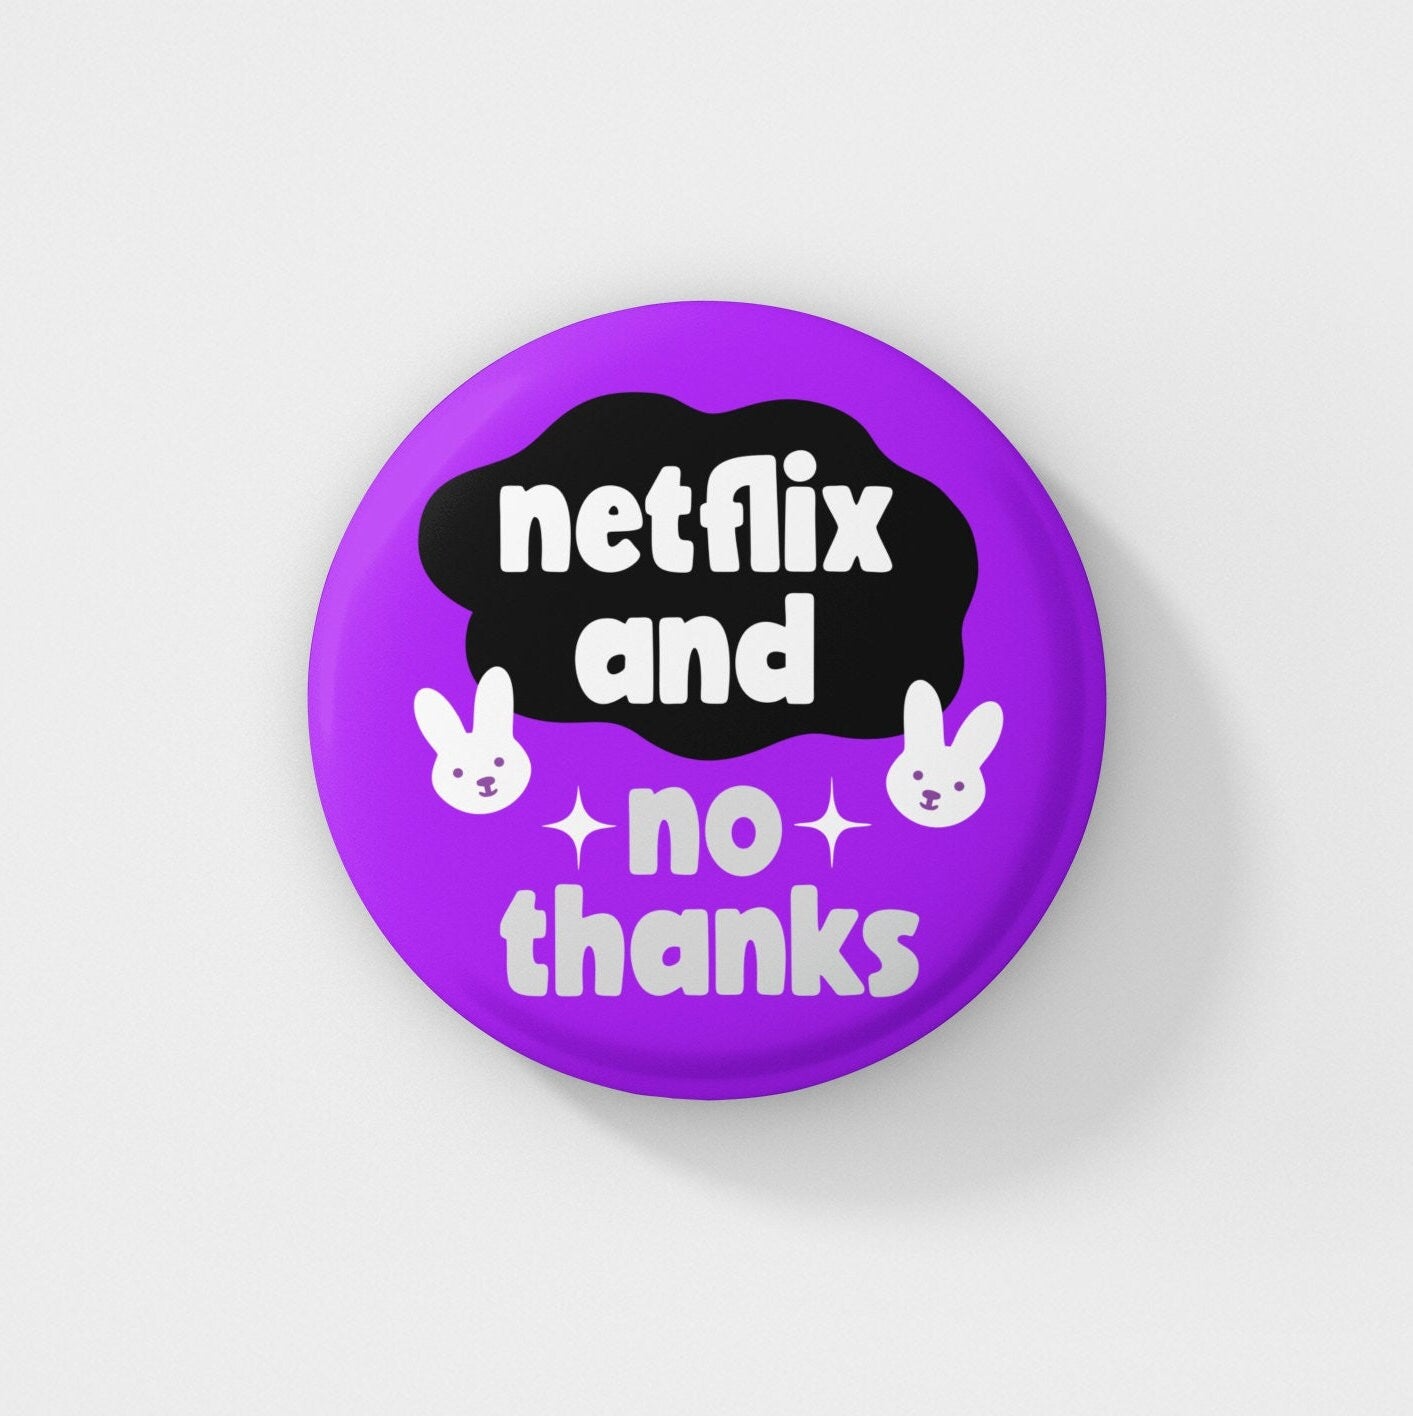 Netflix And No Thanks - Pin Badge / Ace pride, Asexual Pin